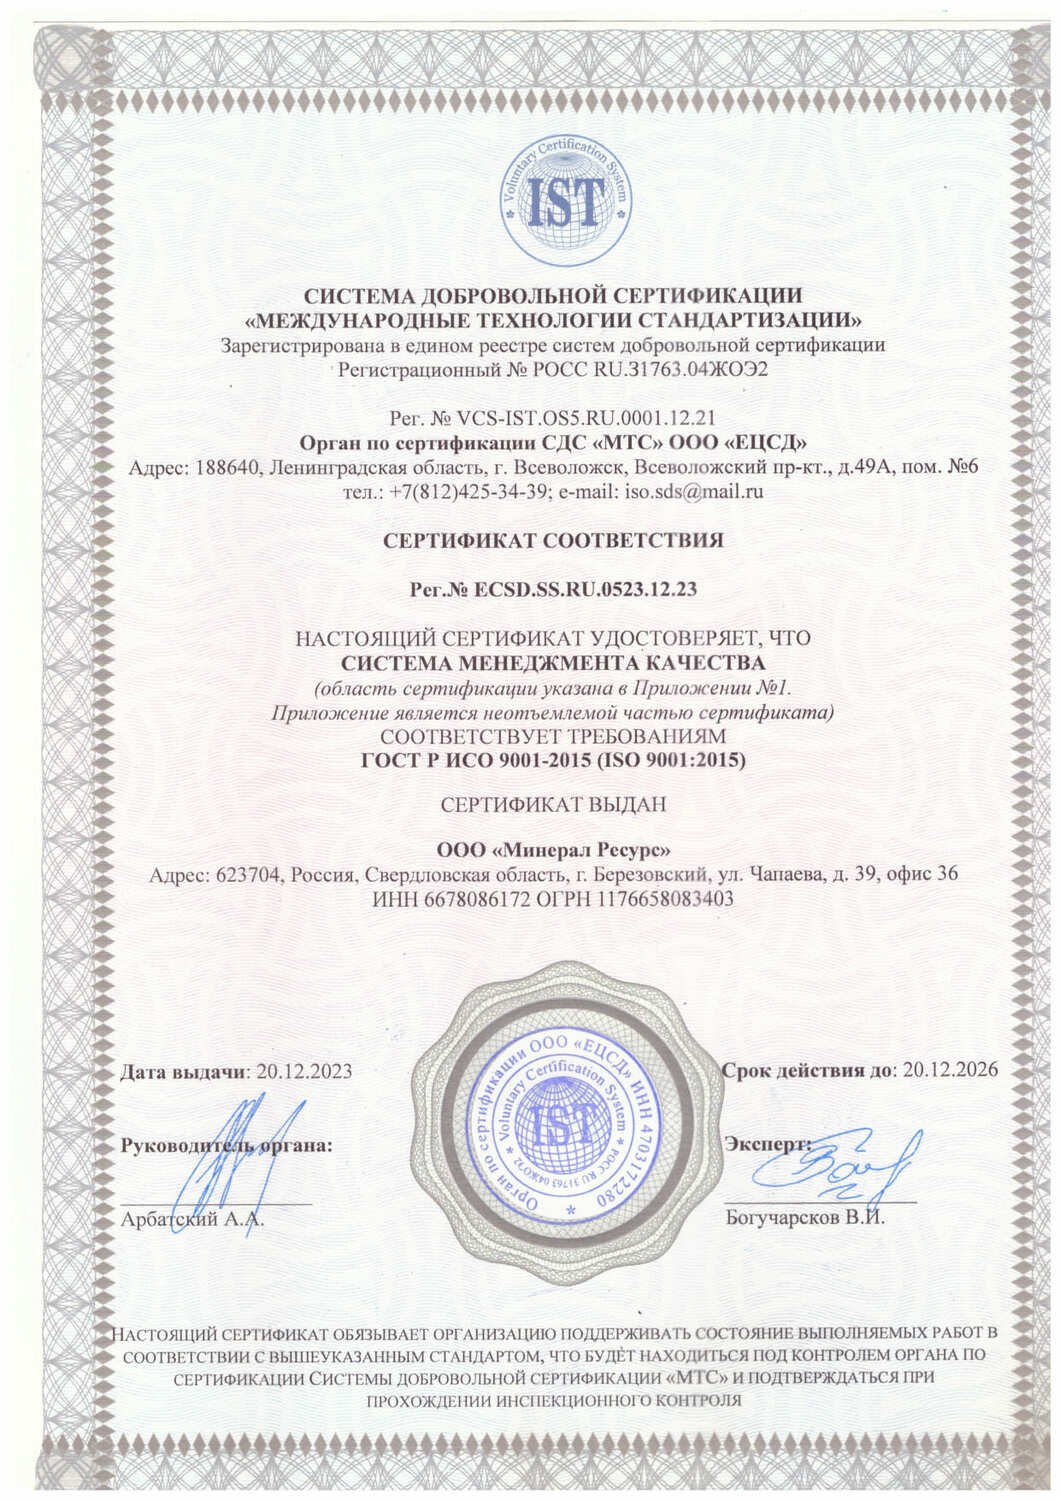 Сертификат ISO 9001 - Минерал Ресурс